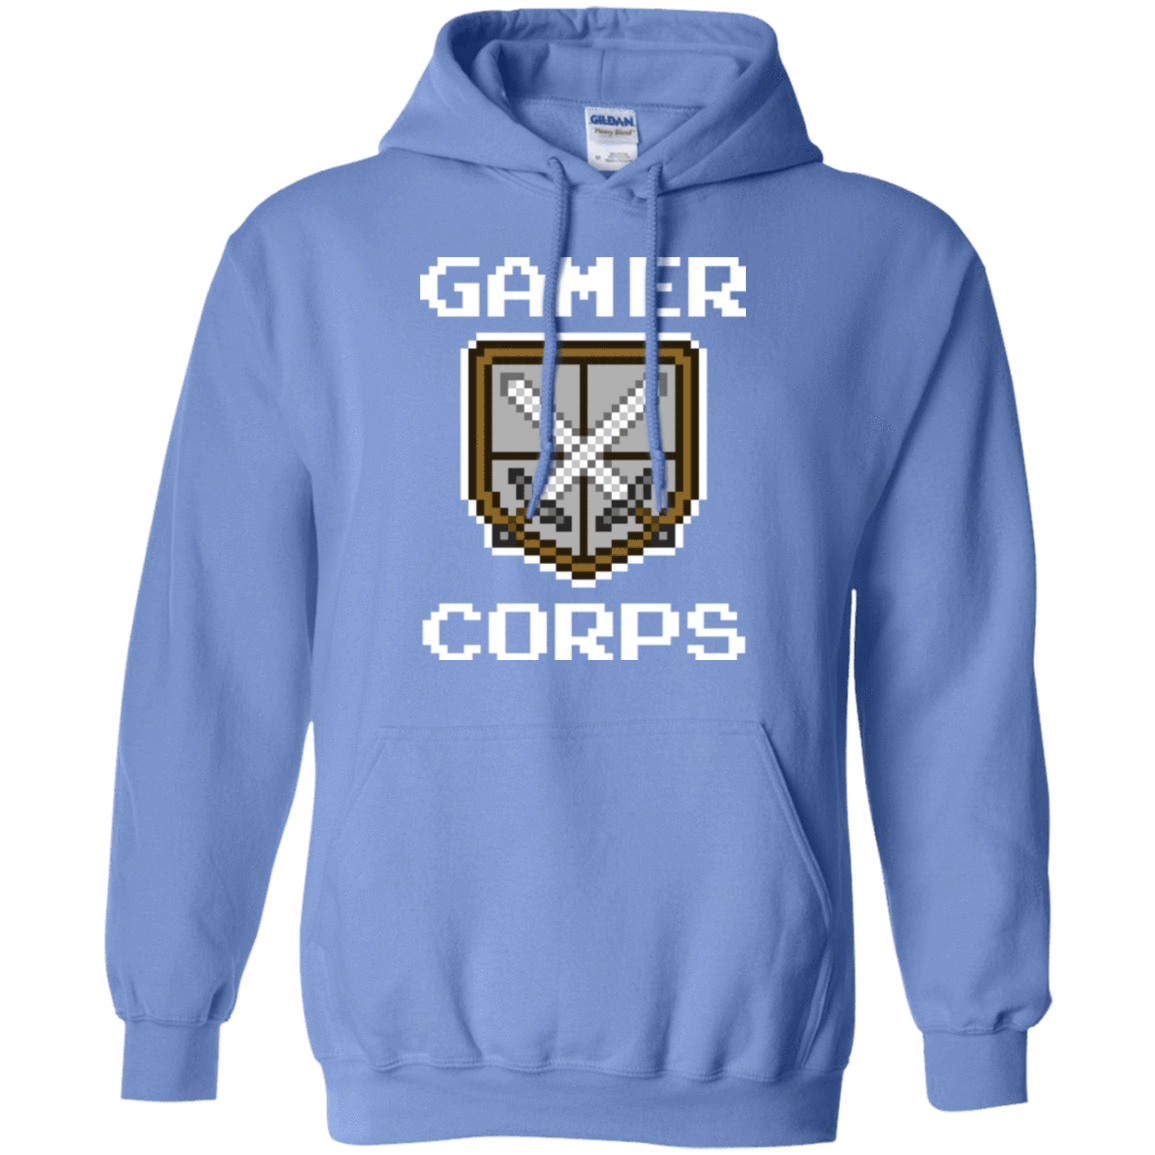 Sweatshirts Carolina Blue / Small Gamer corps Pullover Hoodie